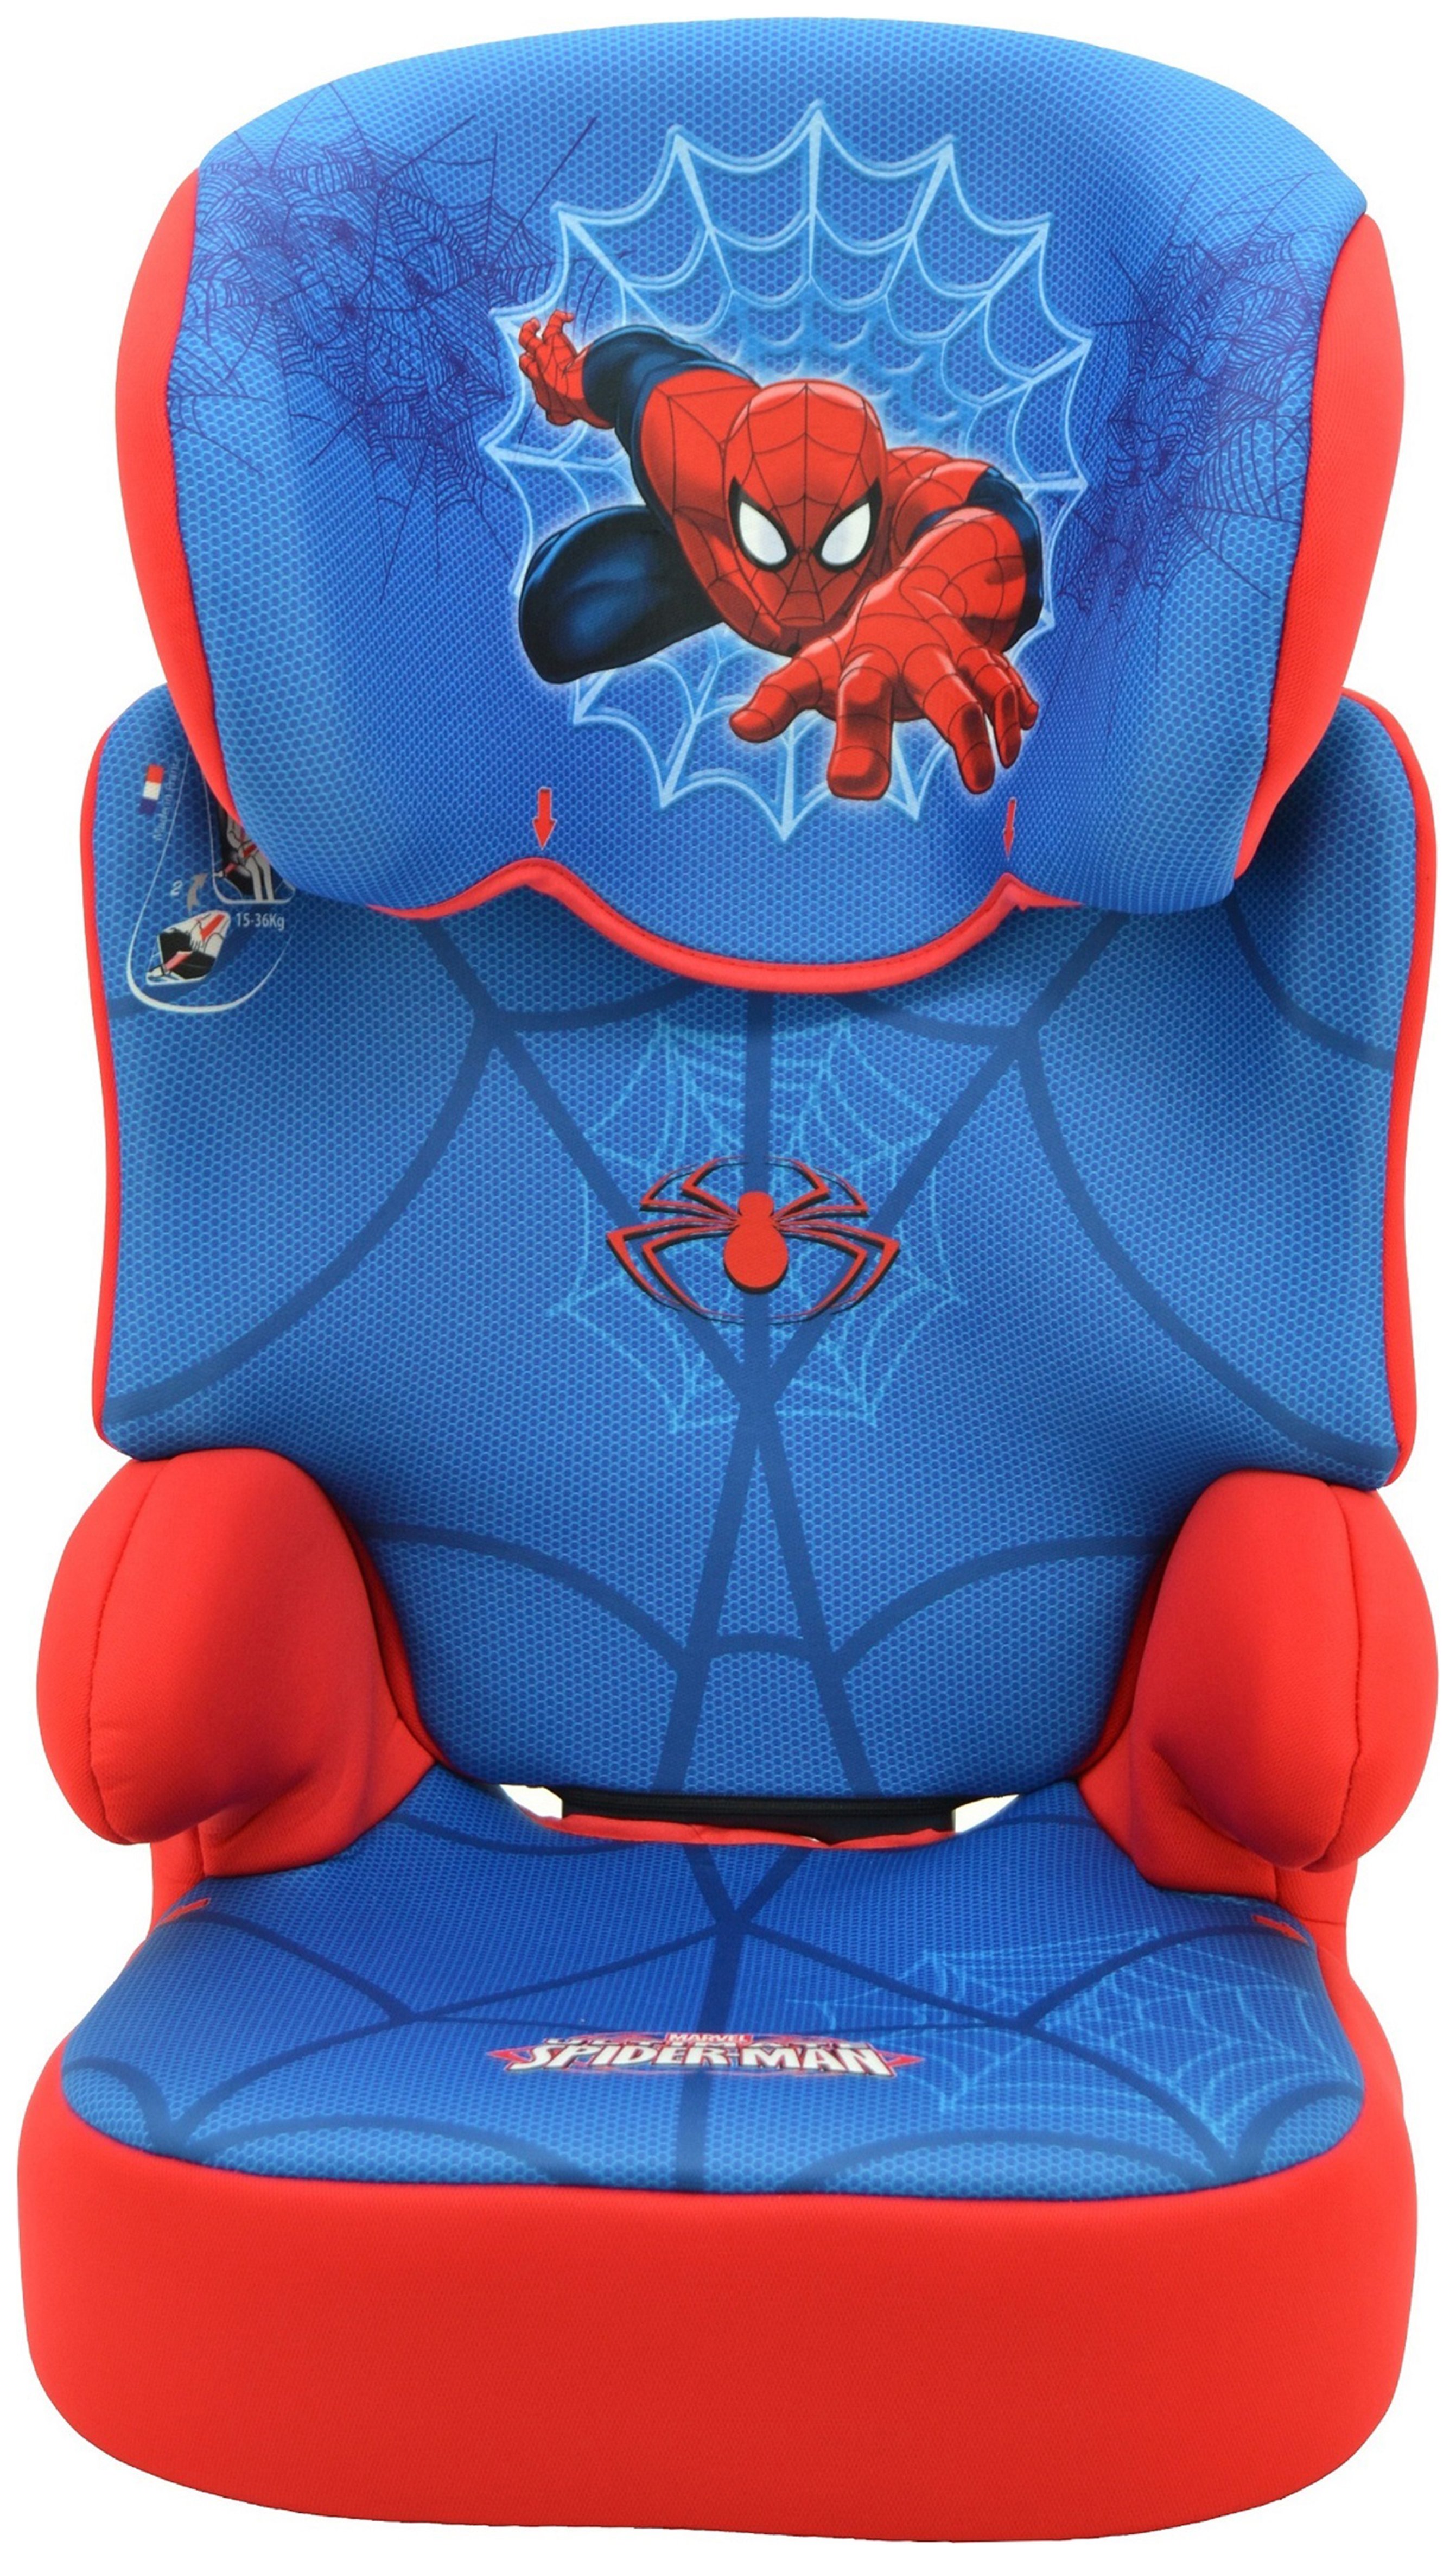 TT Marvel Spiderman-Groups 2-3 Blue Booster review